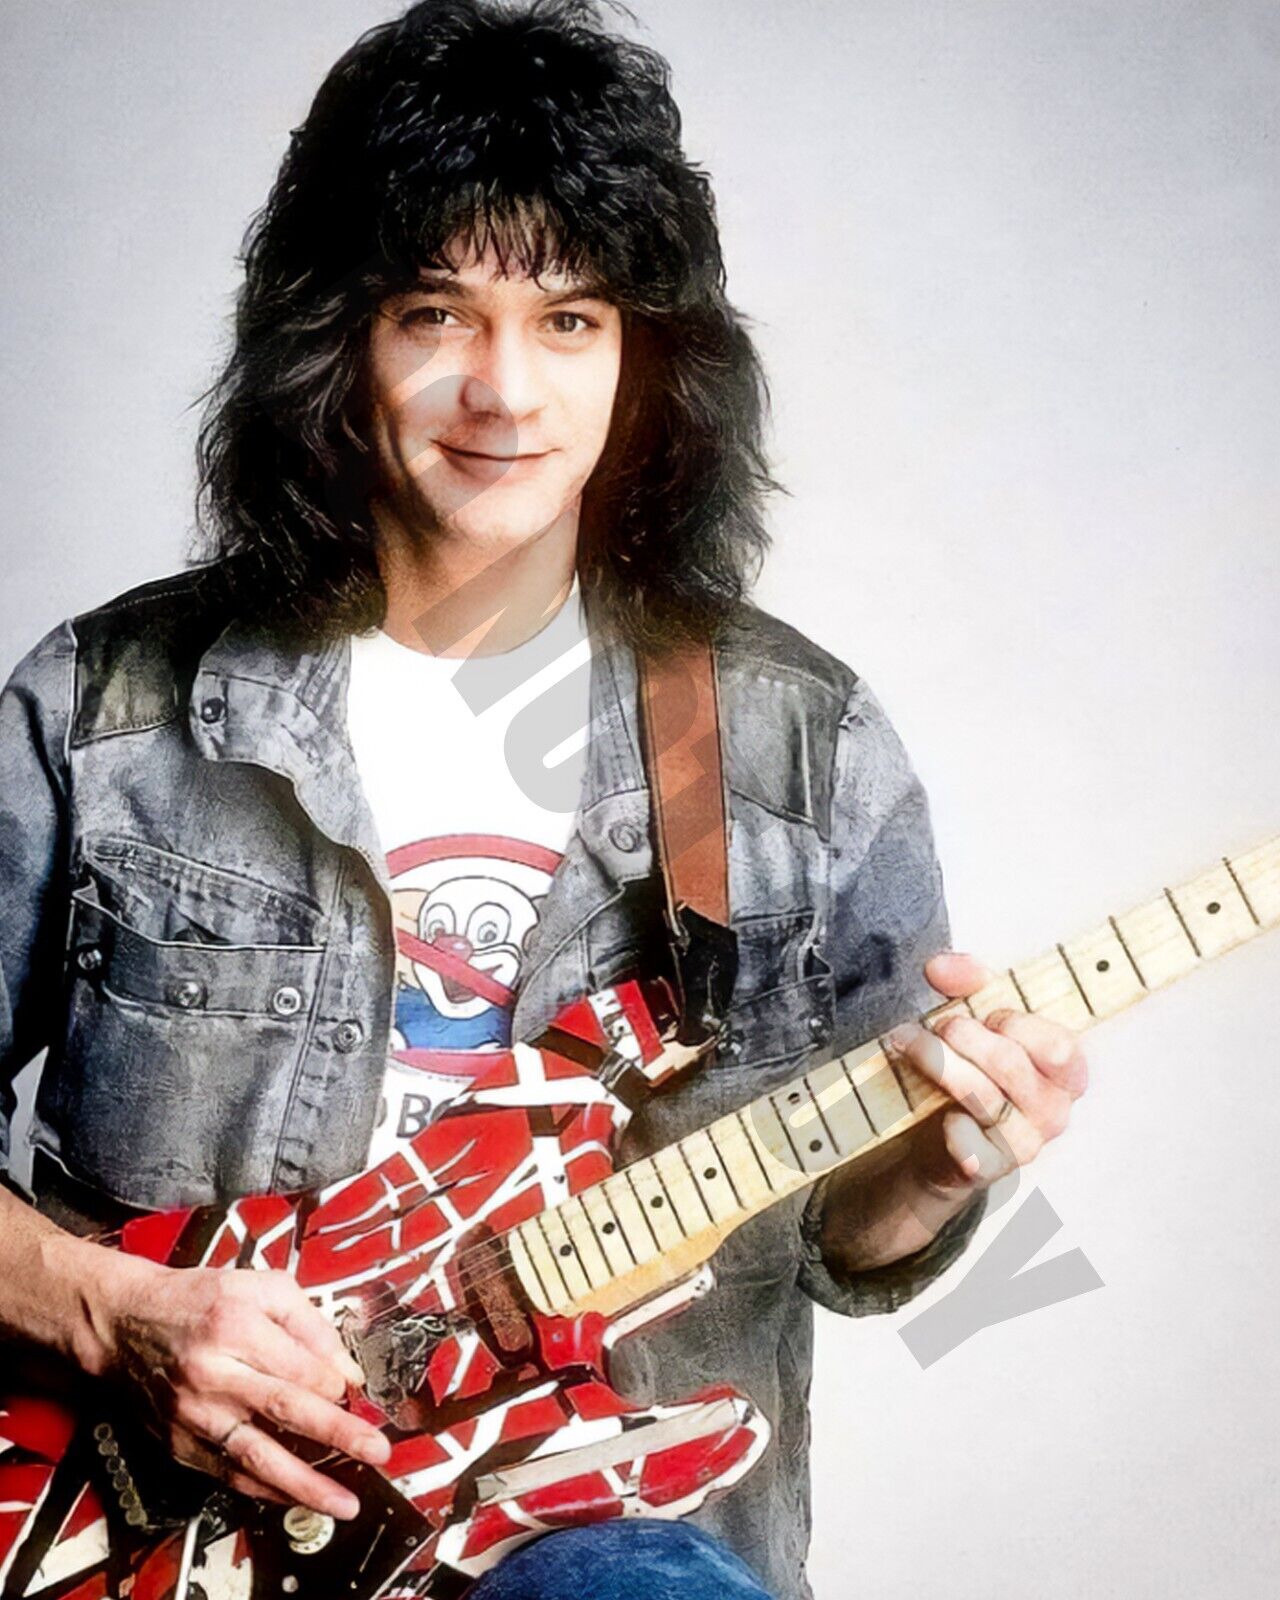 1980s EDDIE VAN HALEN No Bozo T-Shirt Guitar Promo 8x10 Photo